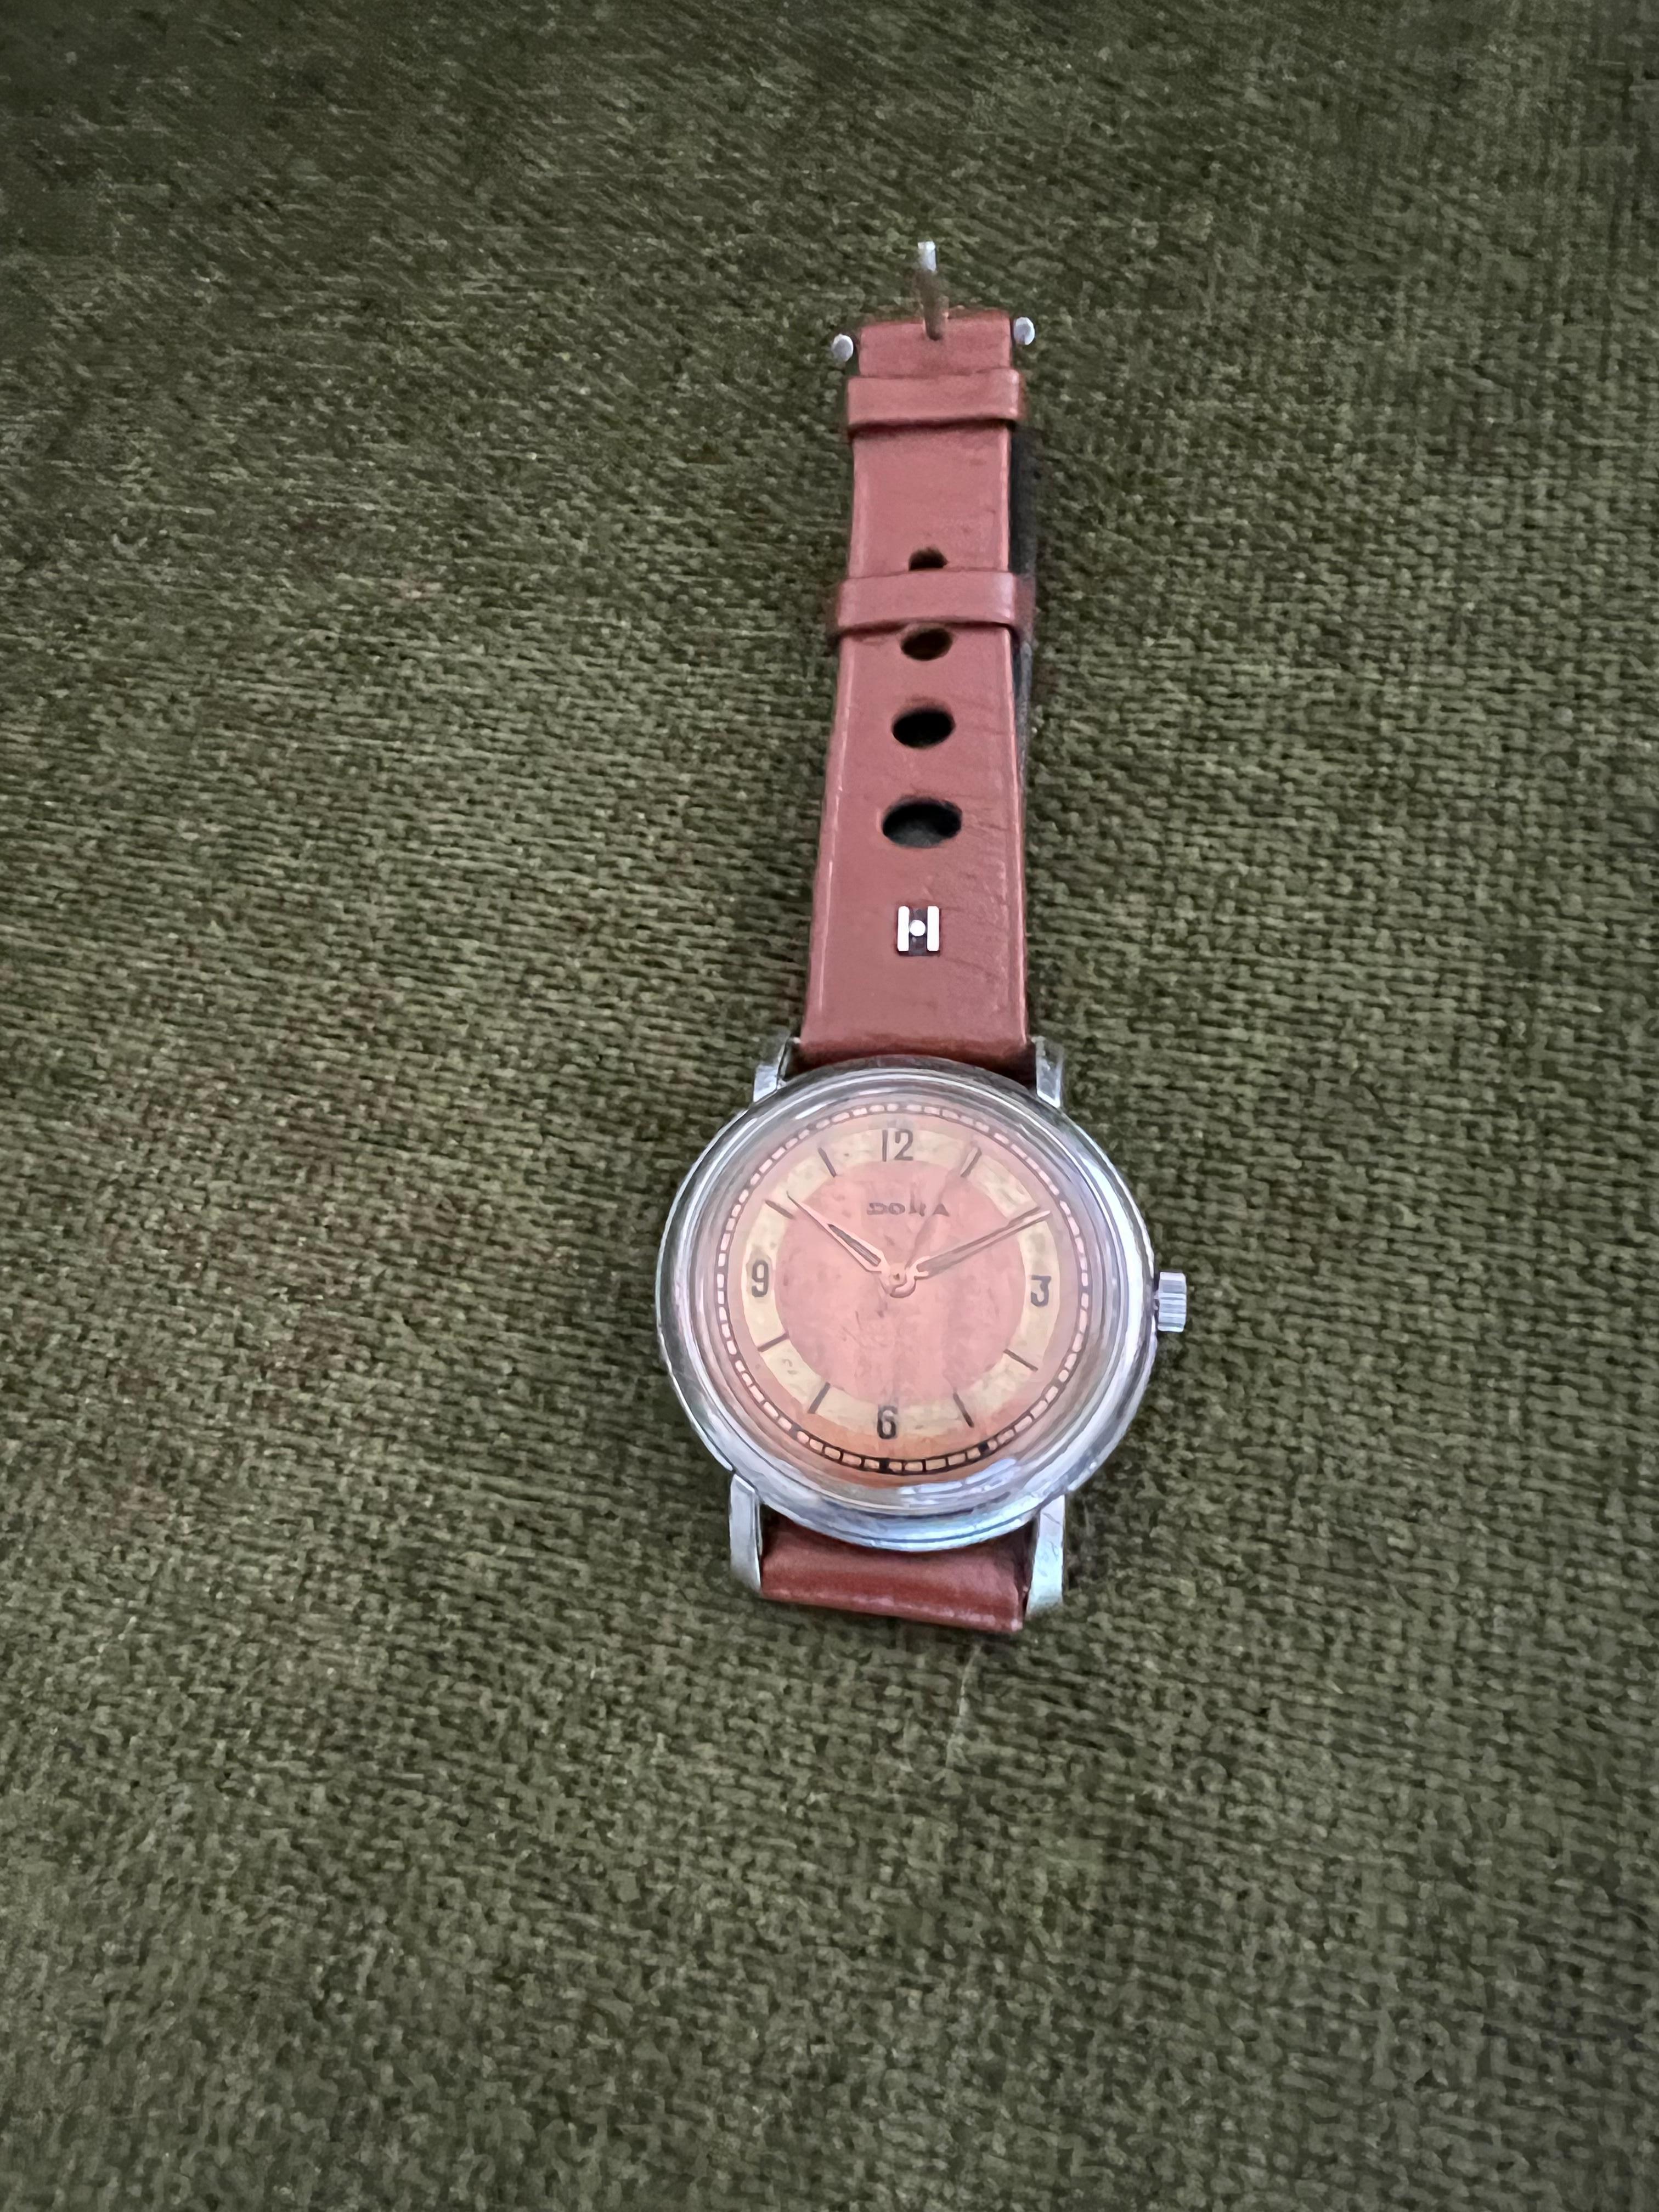 doxa 1960's watches